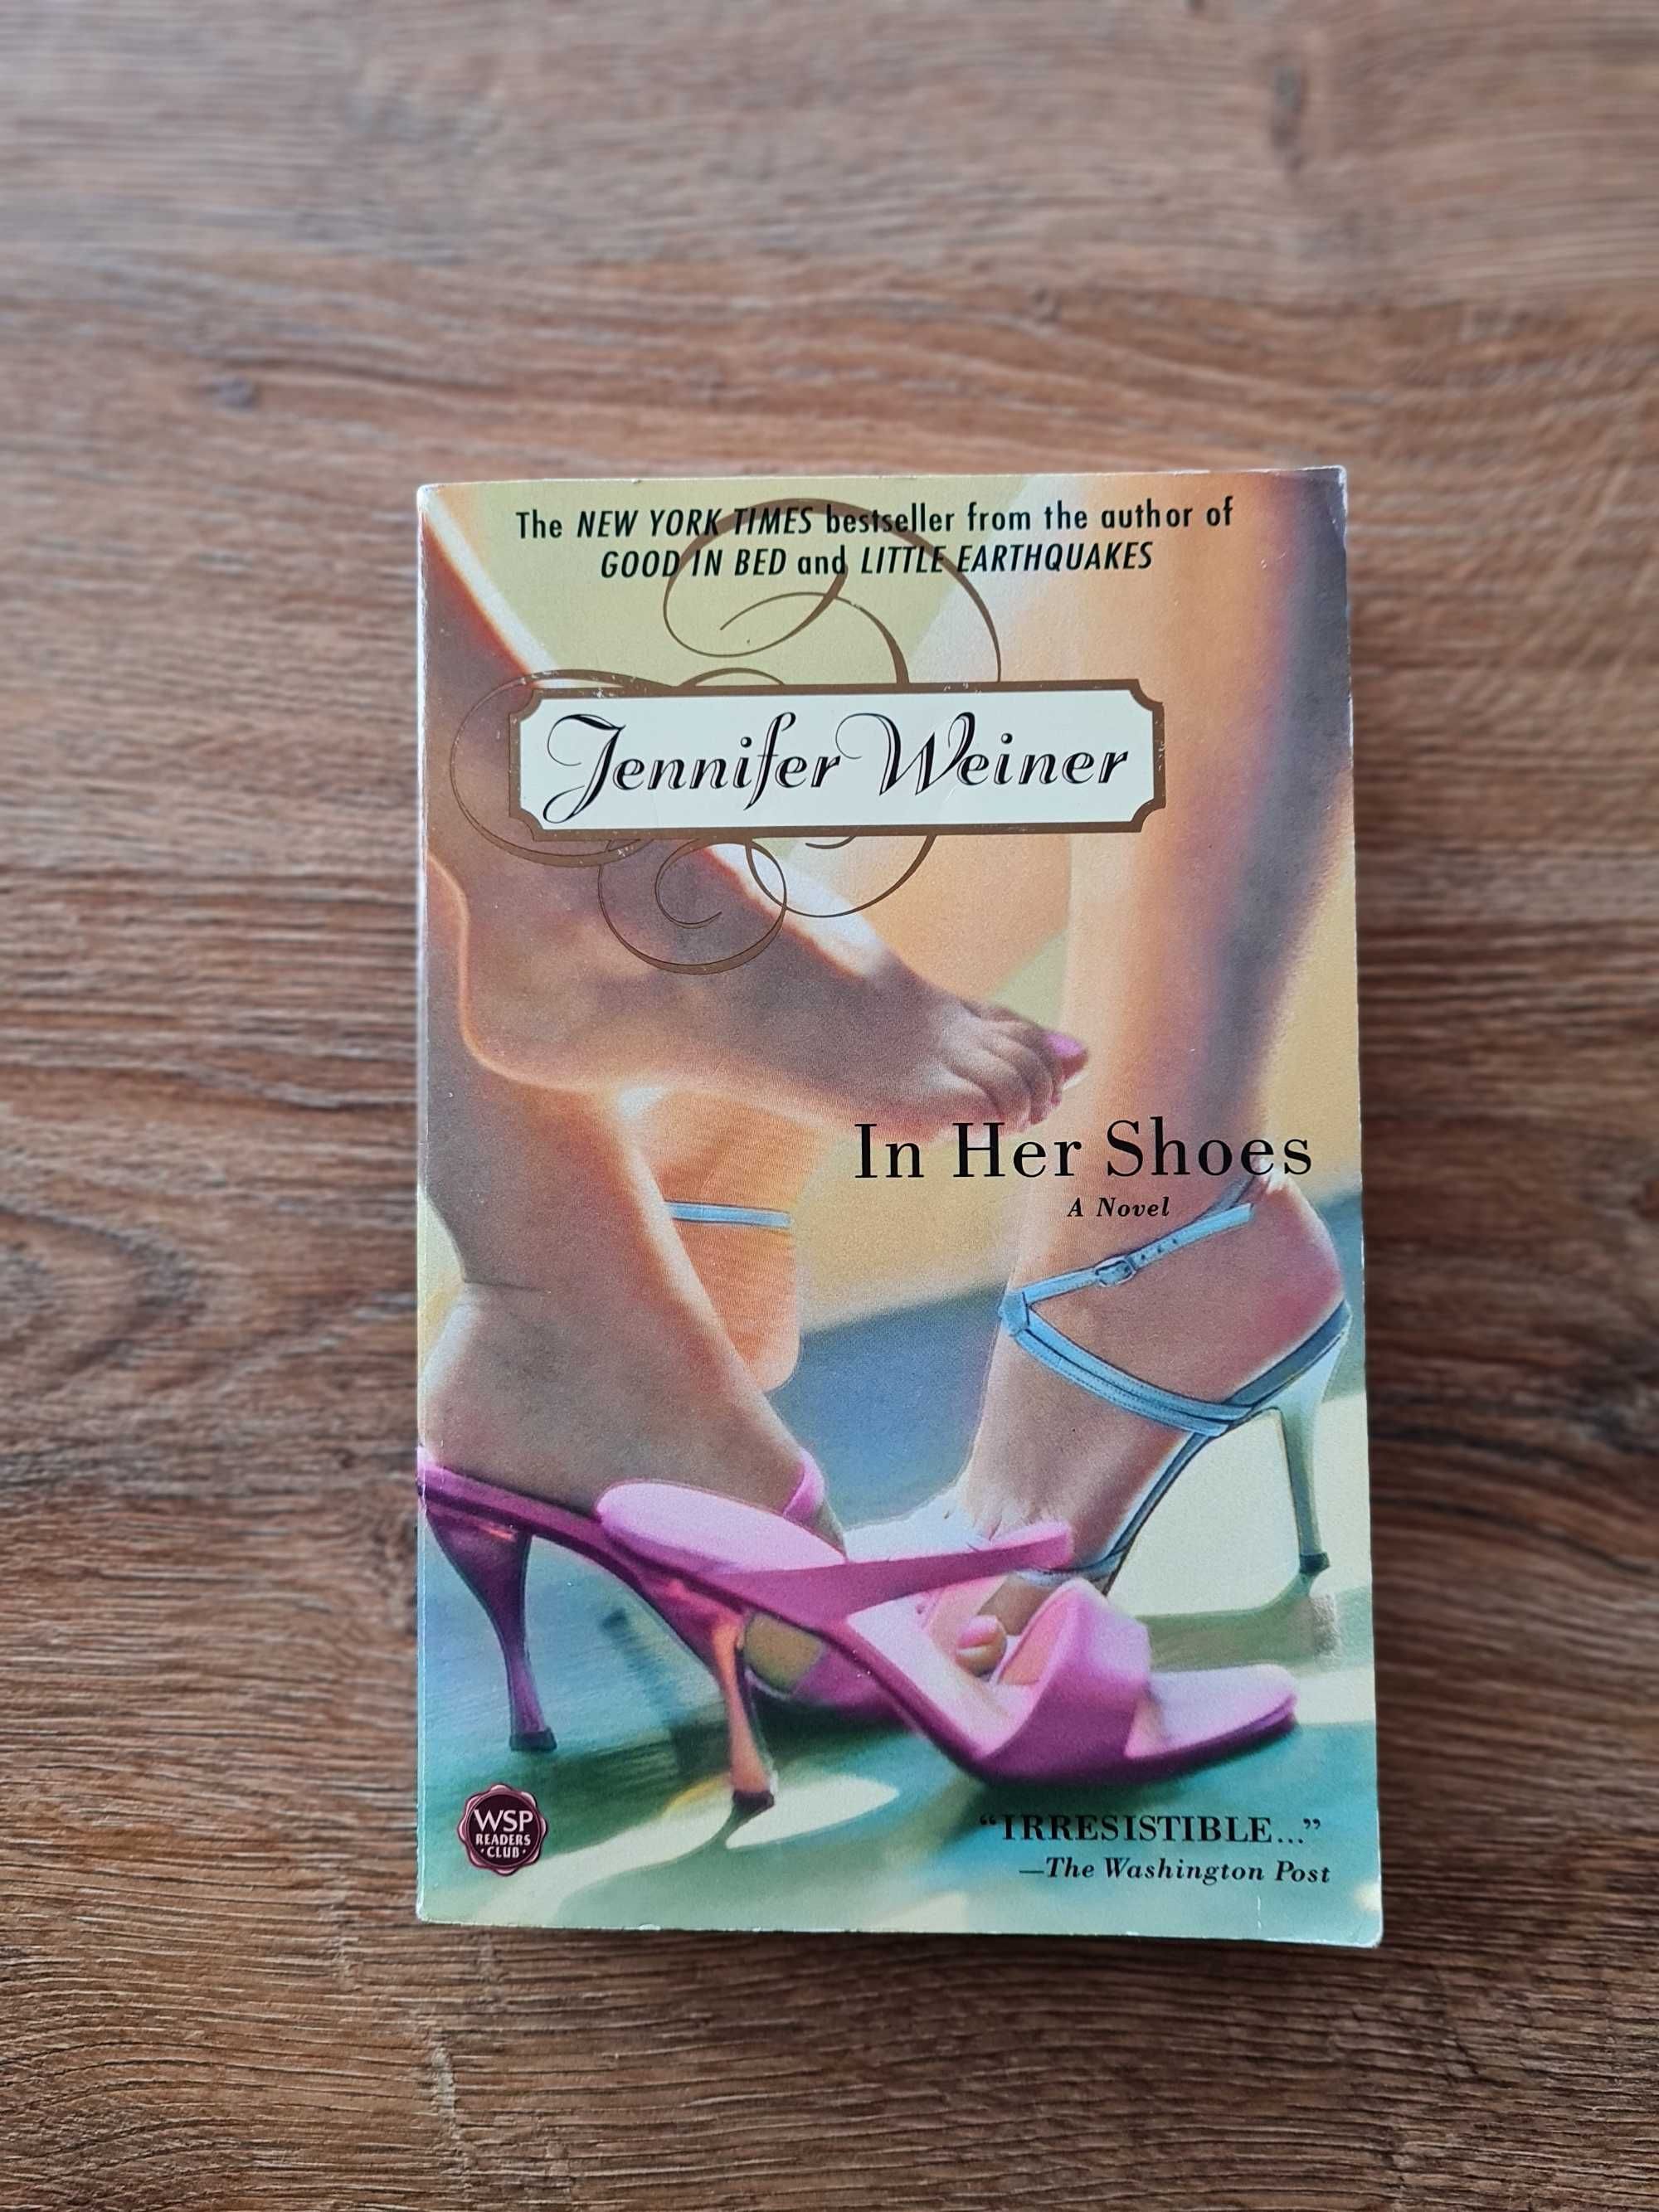 Книга "In Her Shoes", Jennifer Weiner ("Подальше от тебя" Дж. Вайнер)